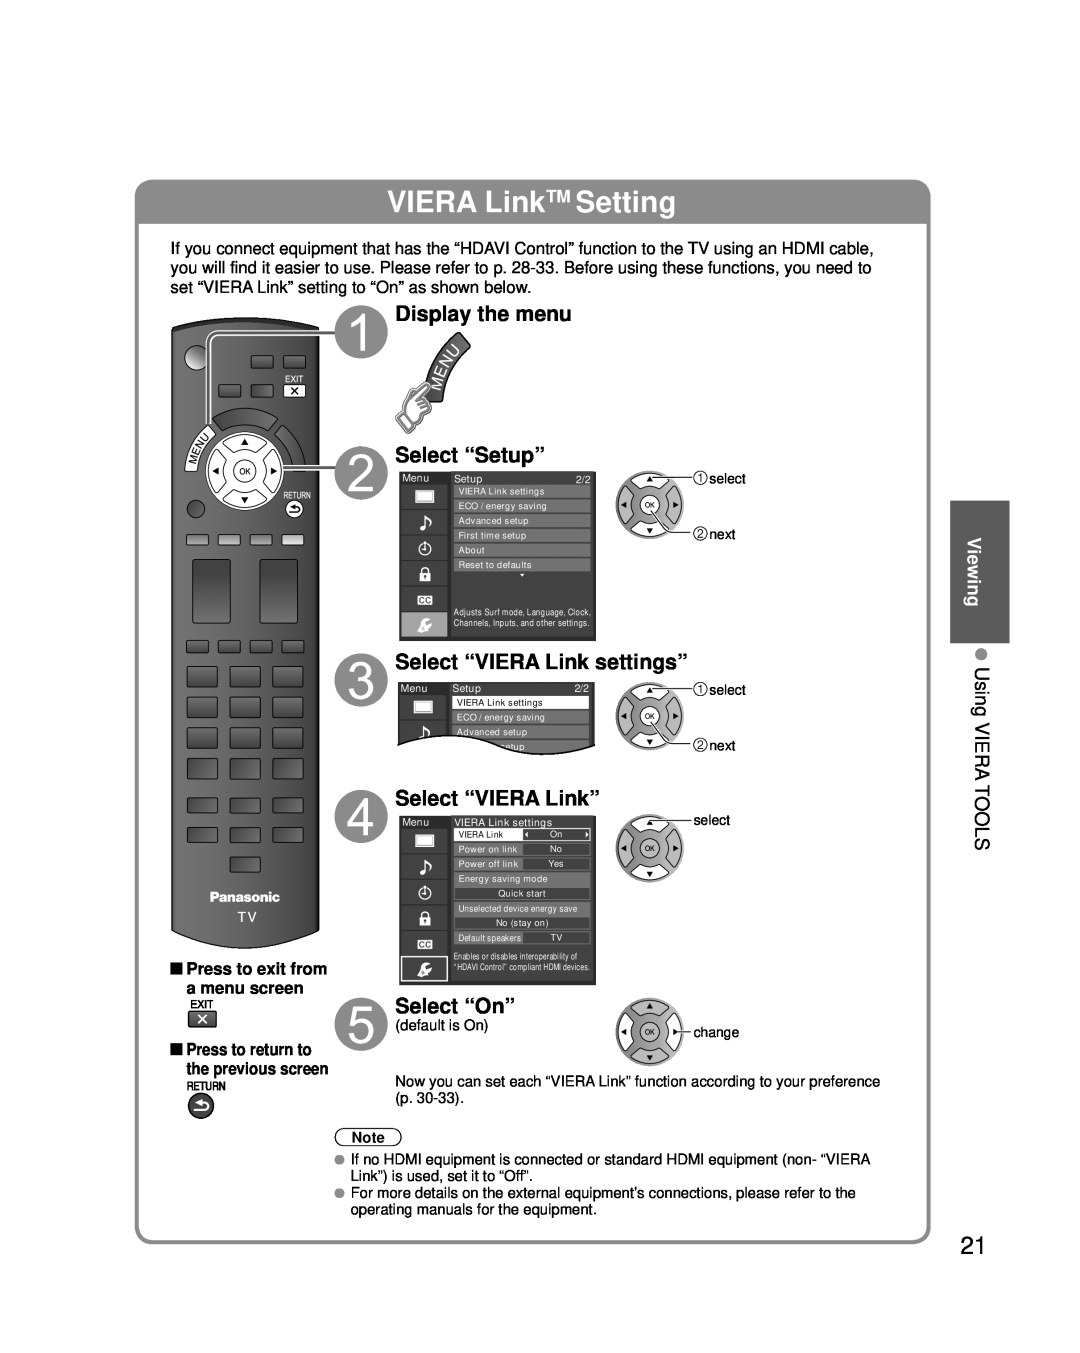 Panasonic TC-P50U2 Display the menu Select “Setup”, Select “VIERA Link settings”, Select “VIERA Link”, Select “On”, Tools 